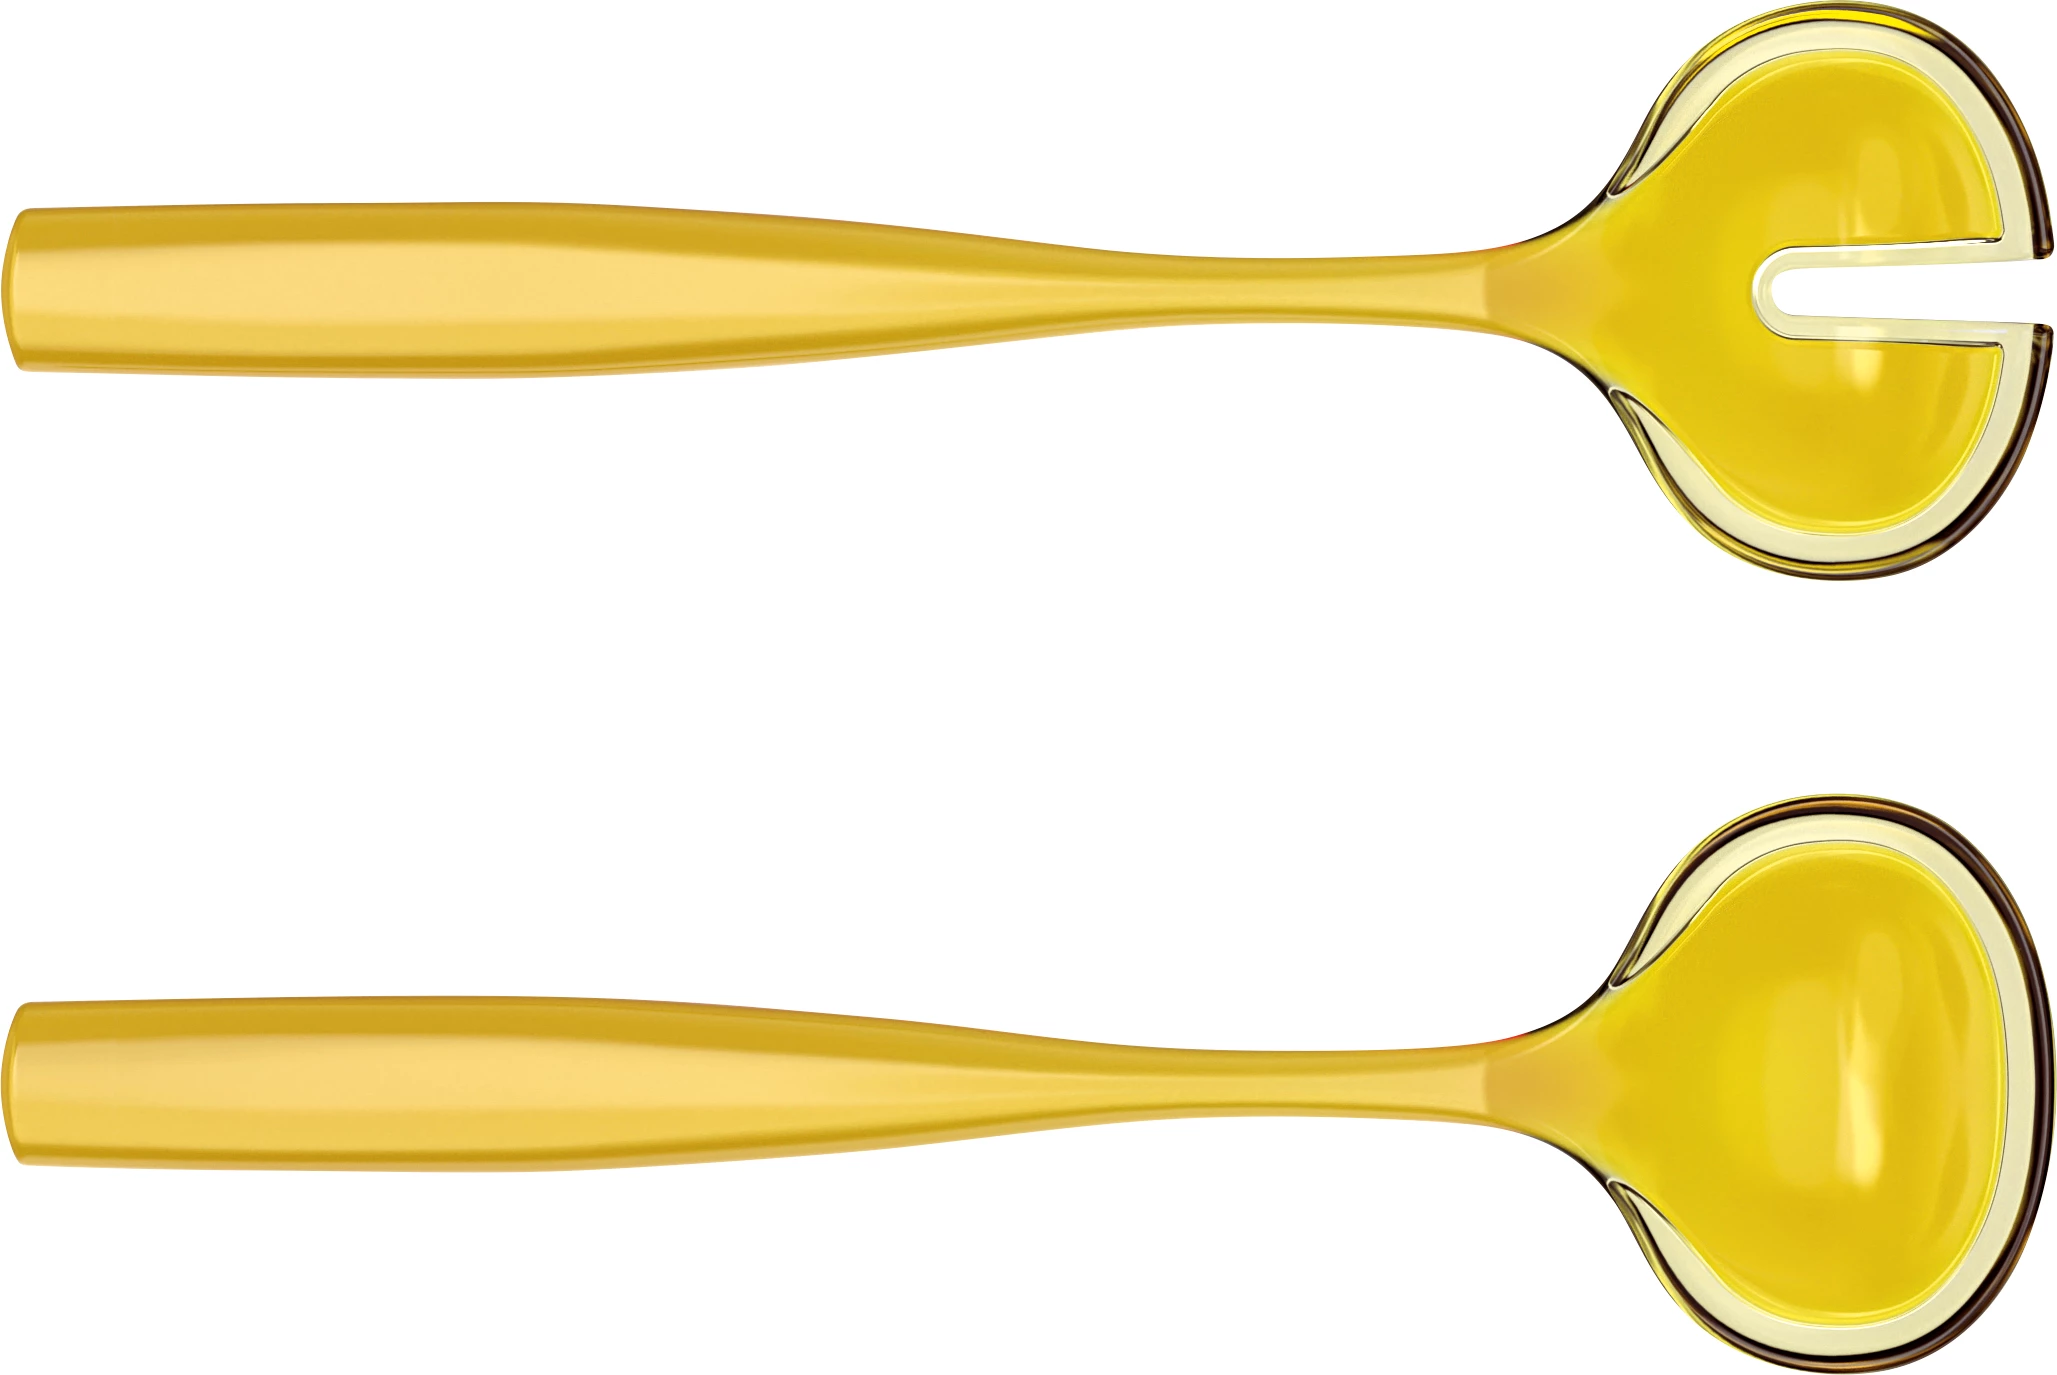 Guzzini Dolcevita salatsæt, gul, 18 cm